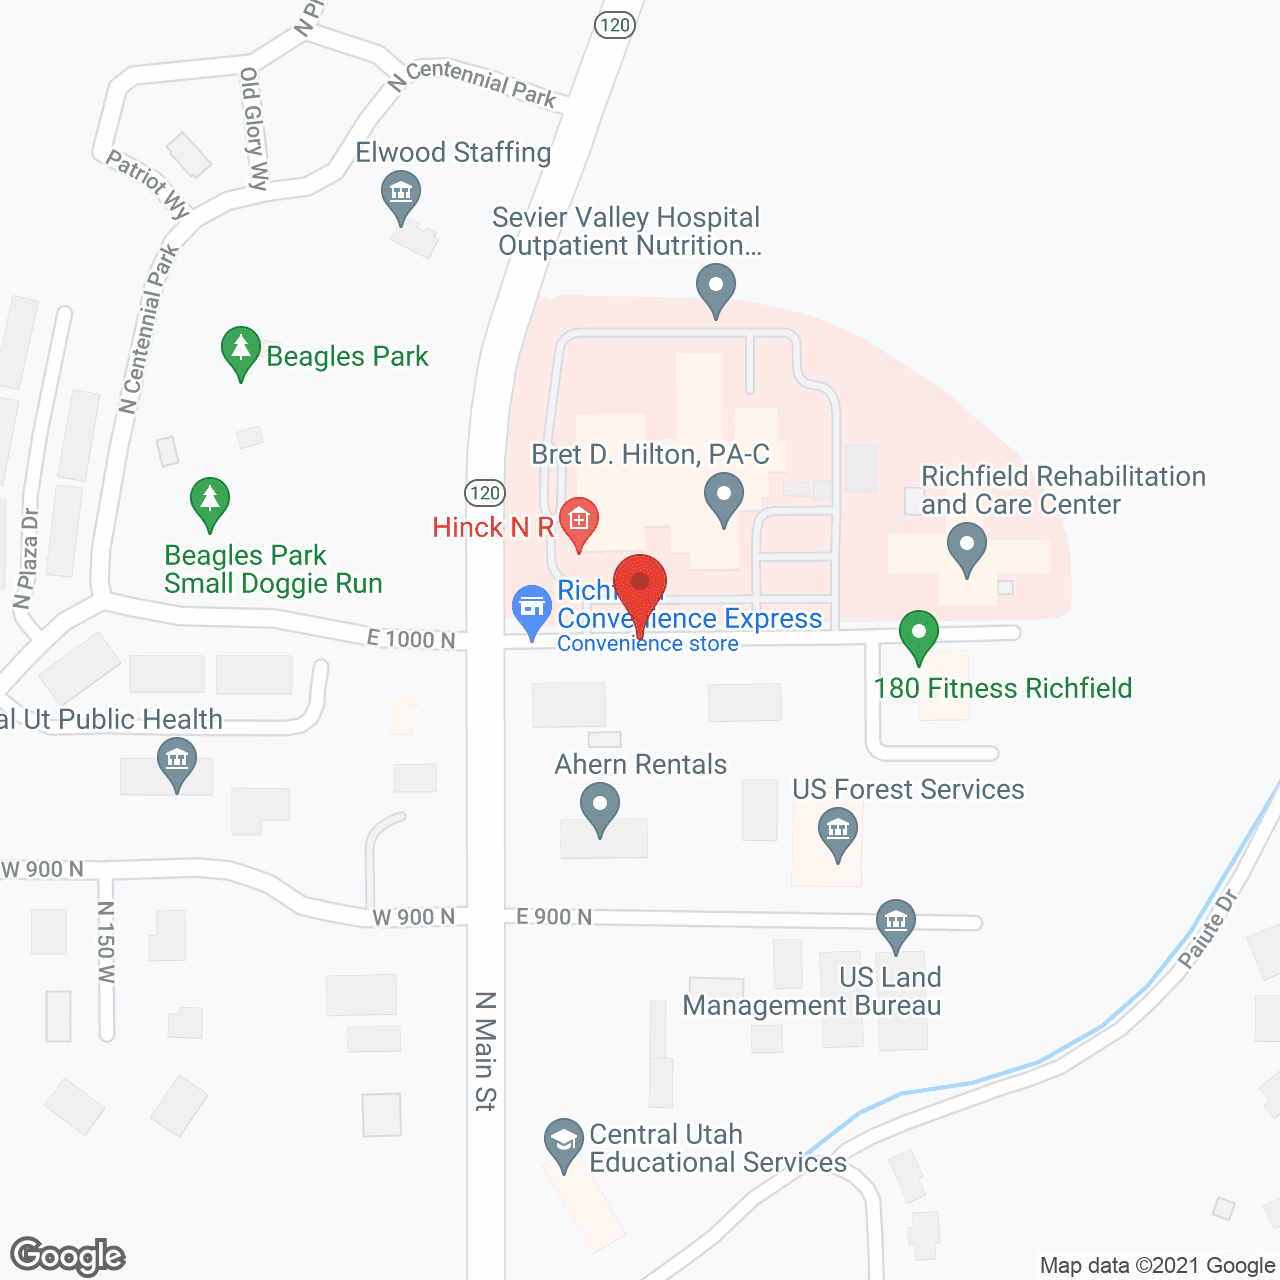 Richfield Care Center in google map